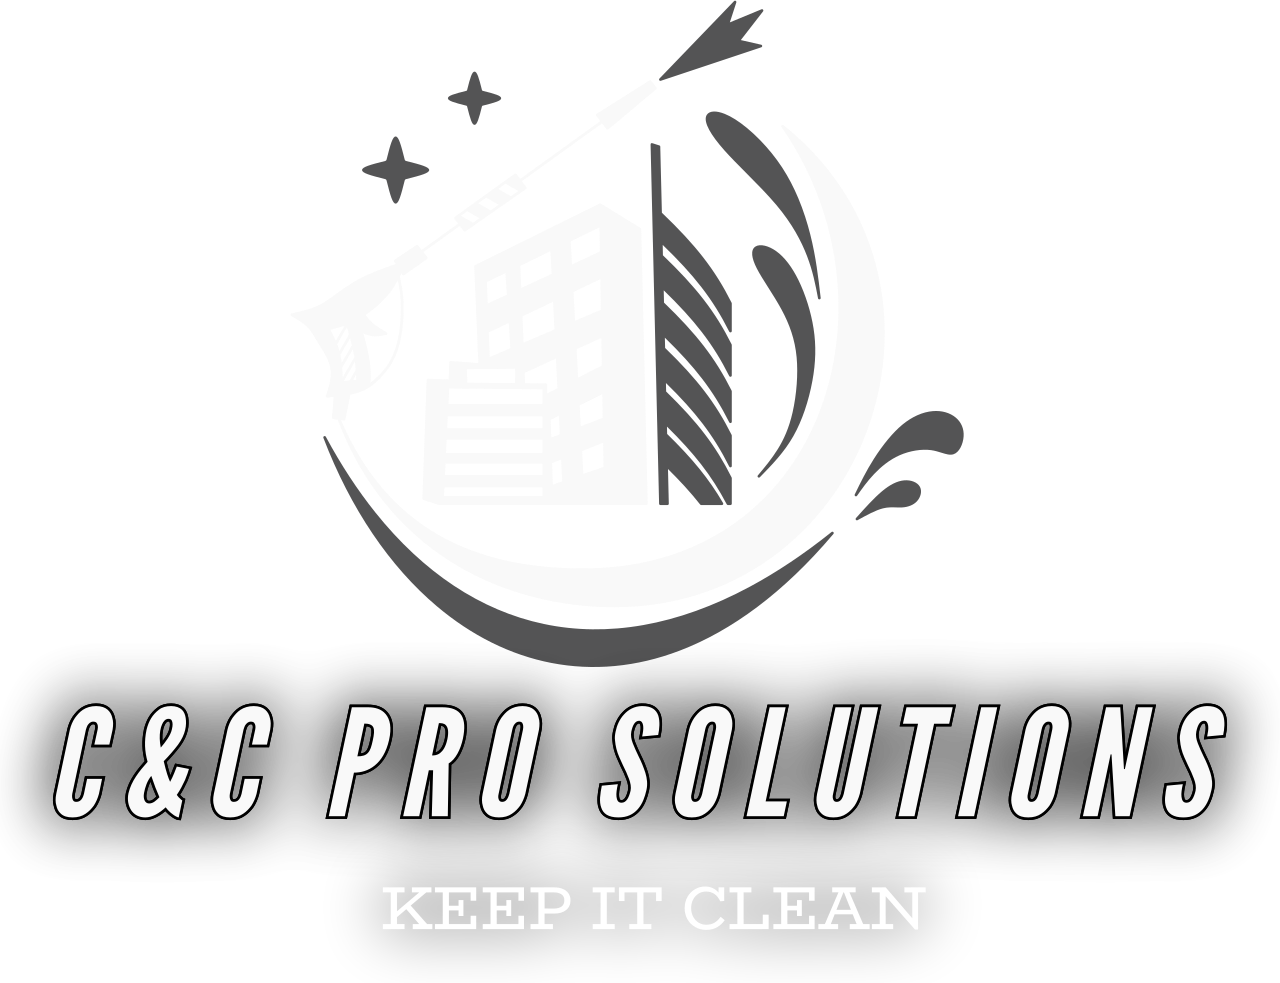 C&C Pro Solutions's web page